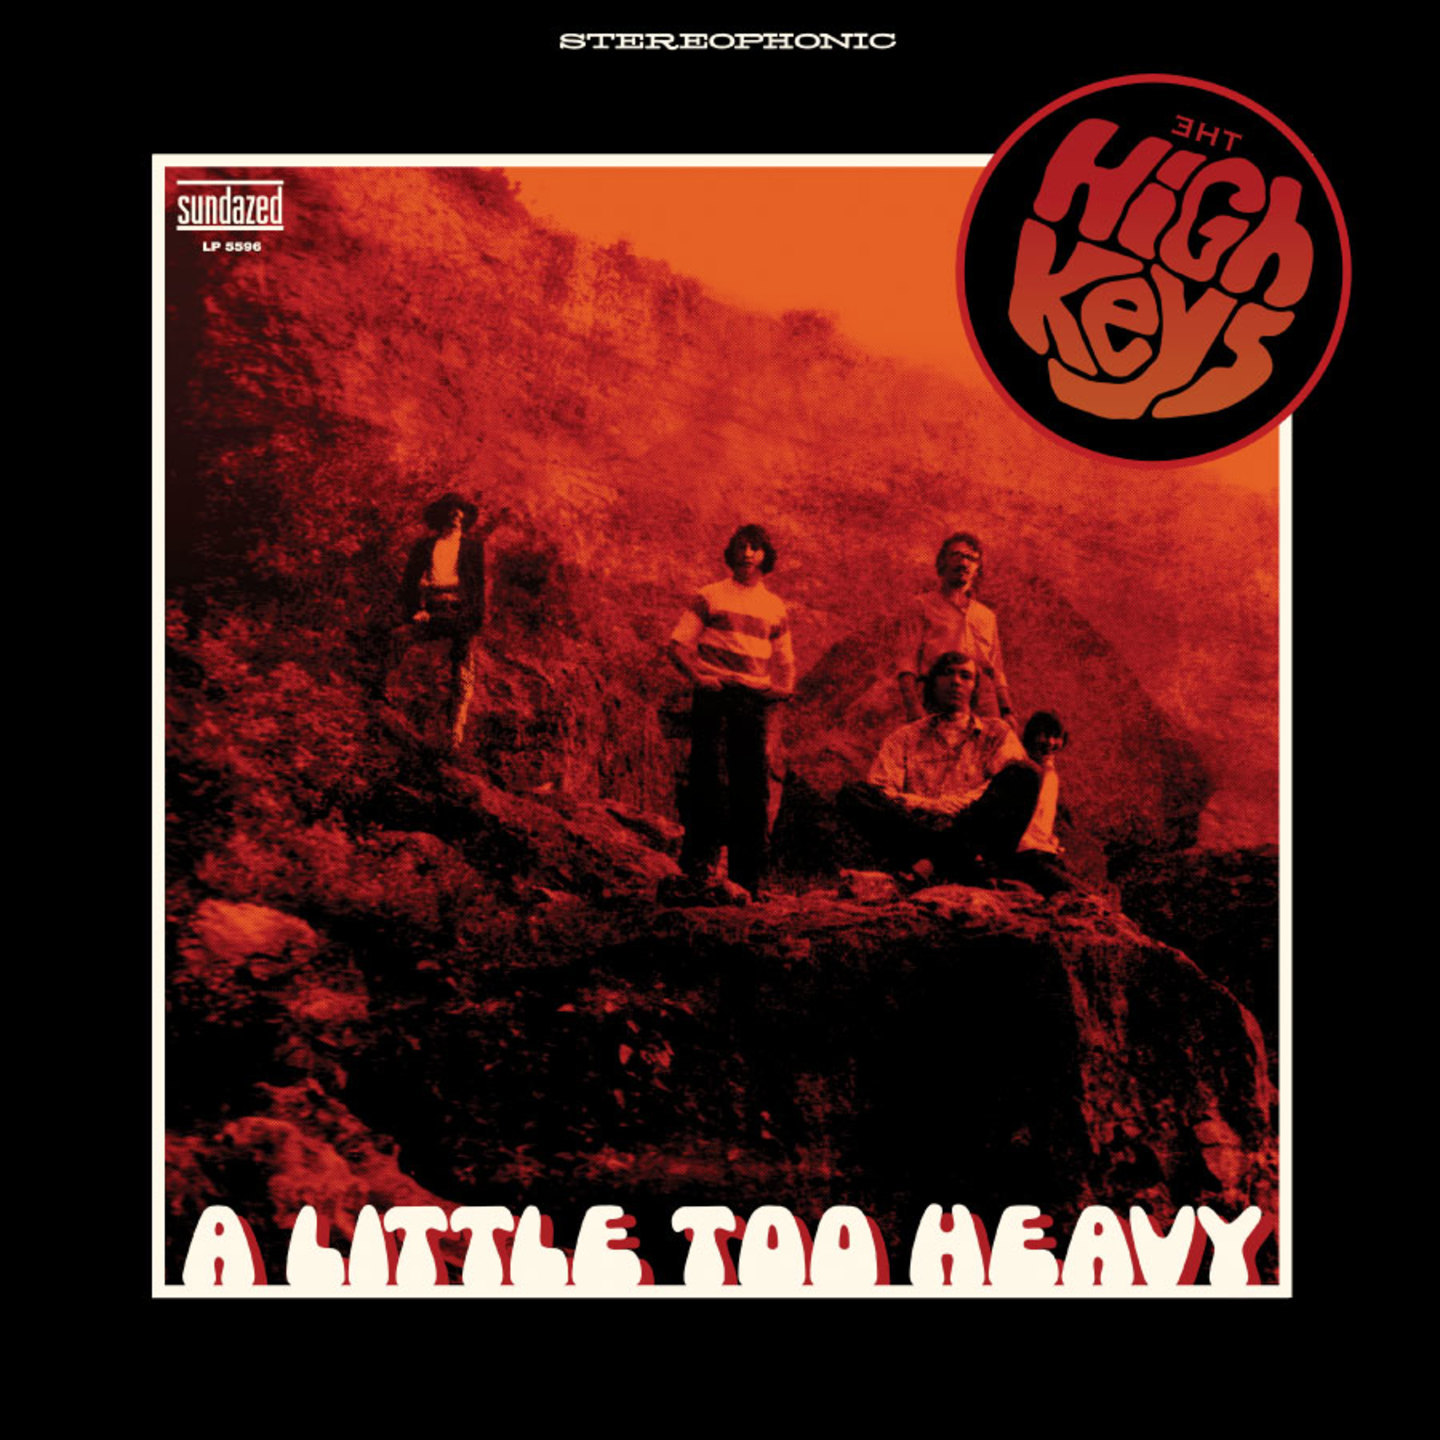 HIGH KEYS, THE - A Little Too Heavy LP (Orange Vinyl)